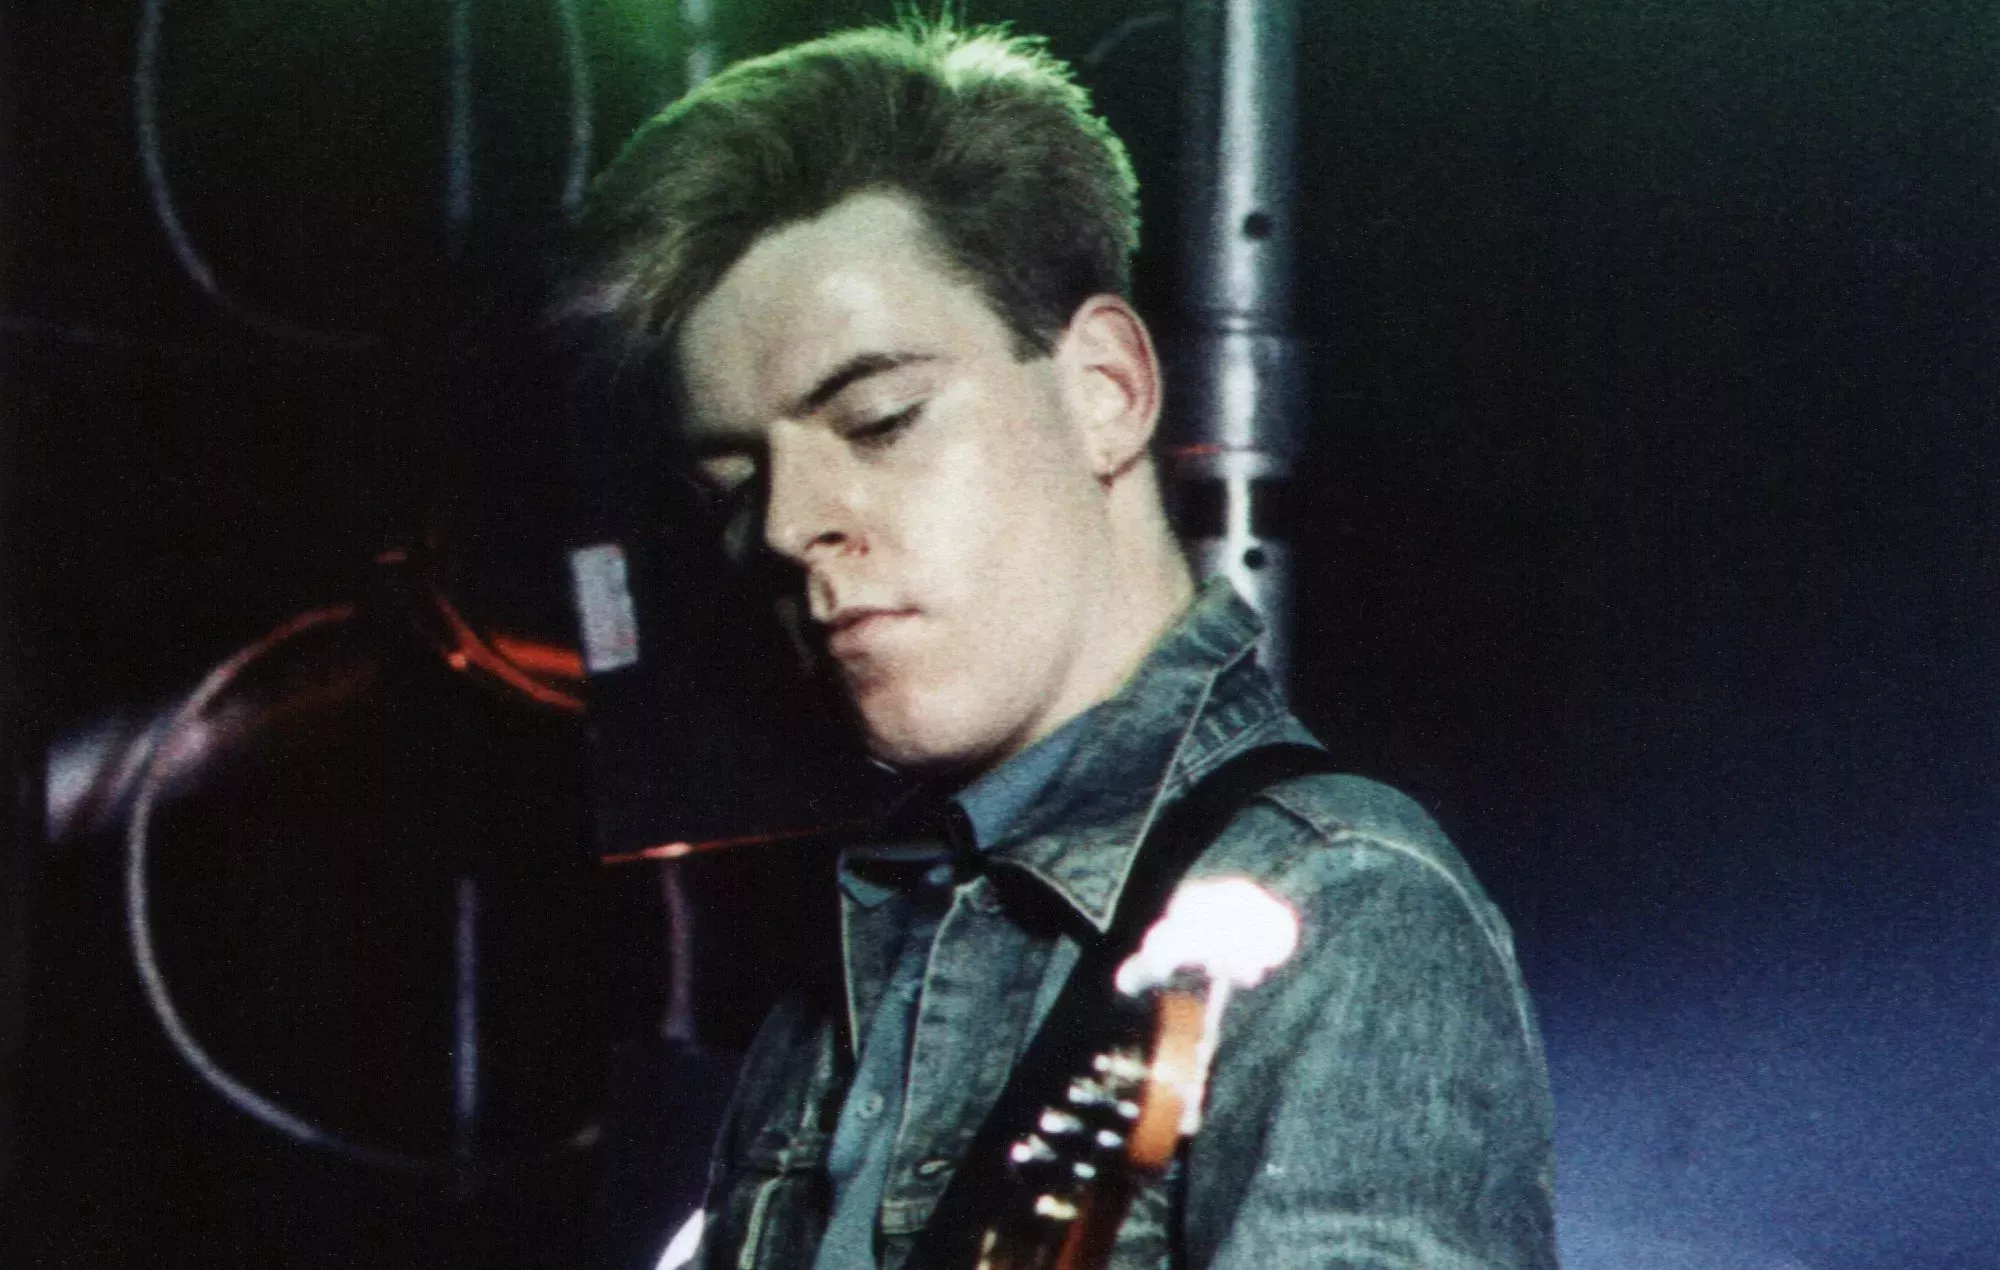 Andy Rourke, bajista de The Smiths, ha muerto